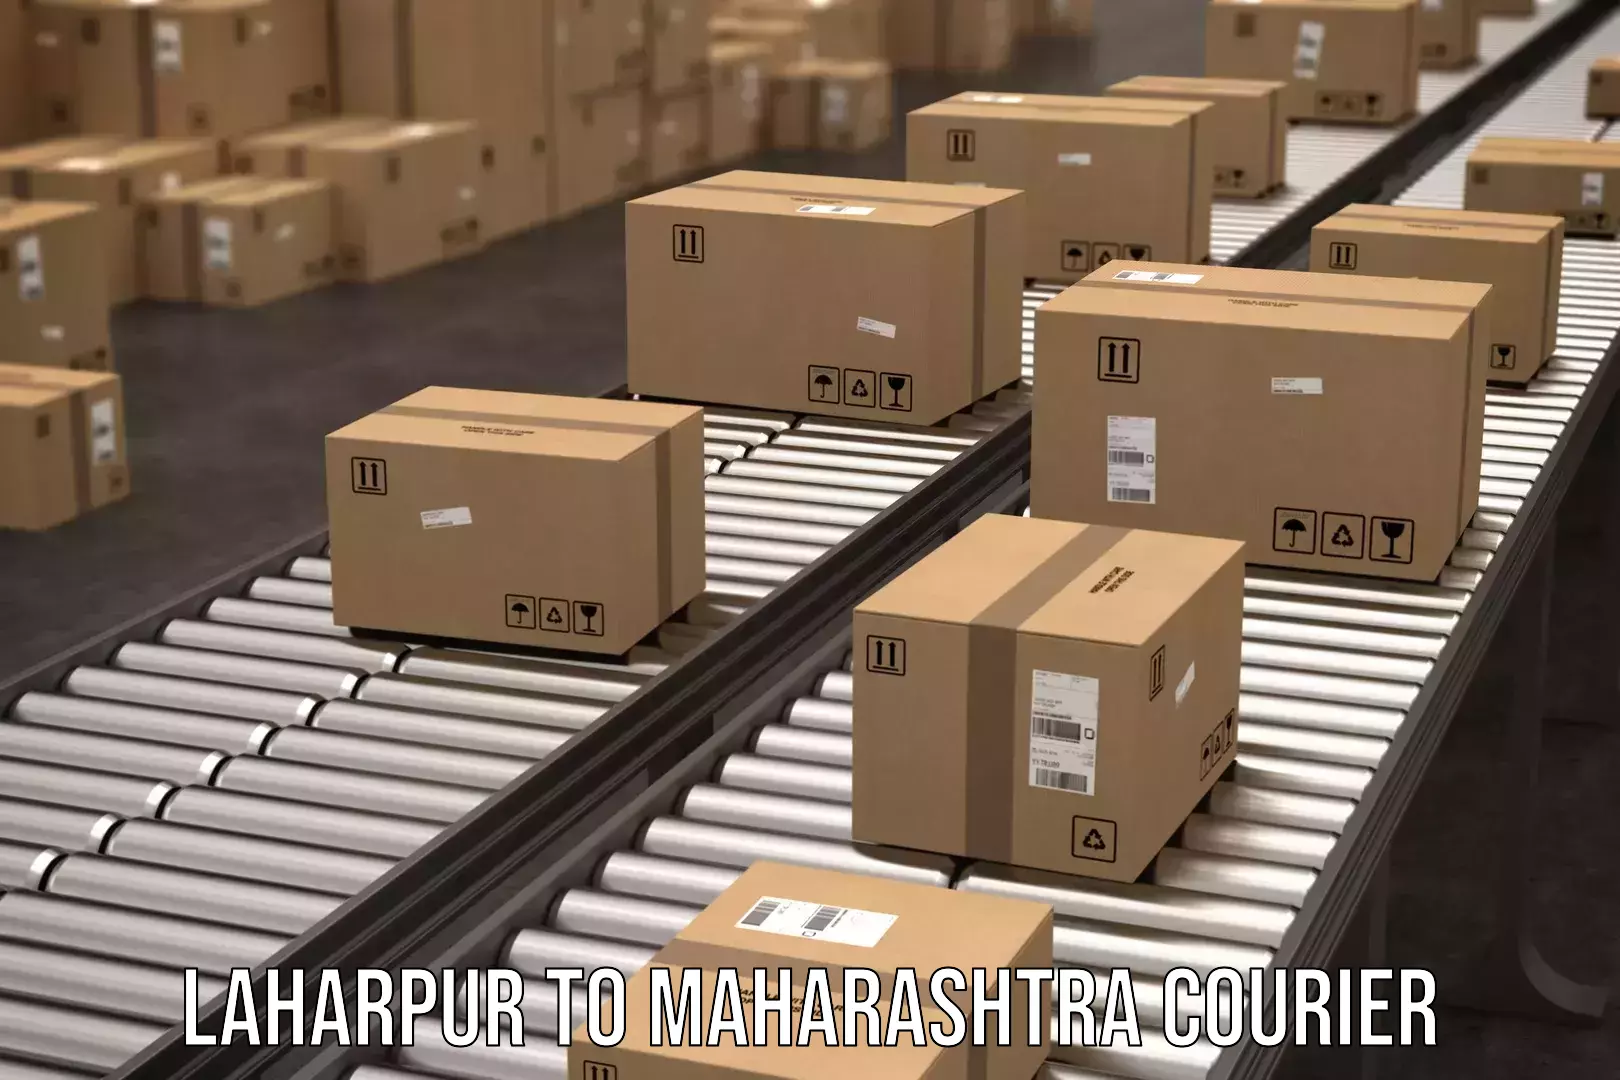 Express logistics providers Laharpur to Maharashtra